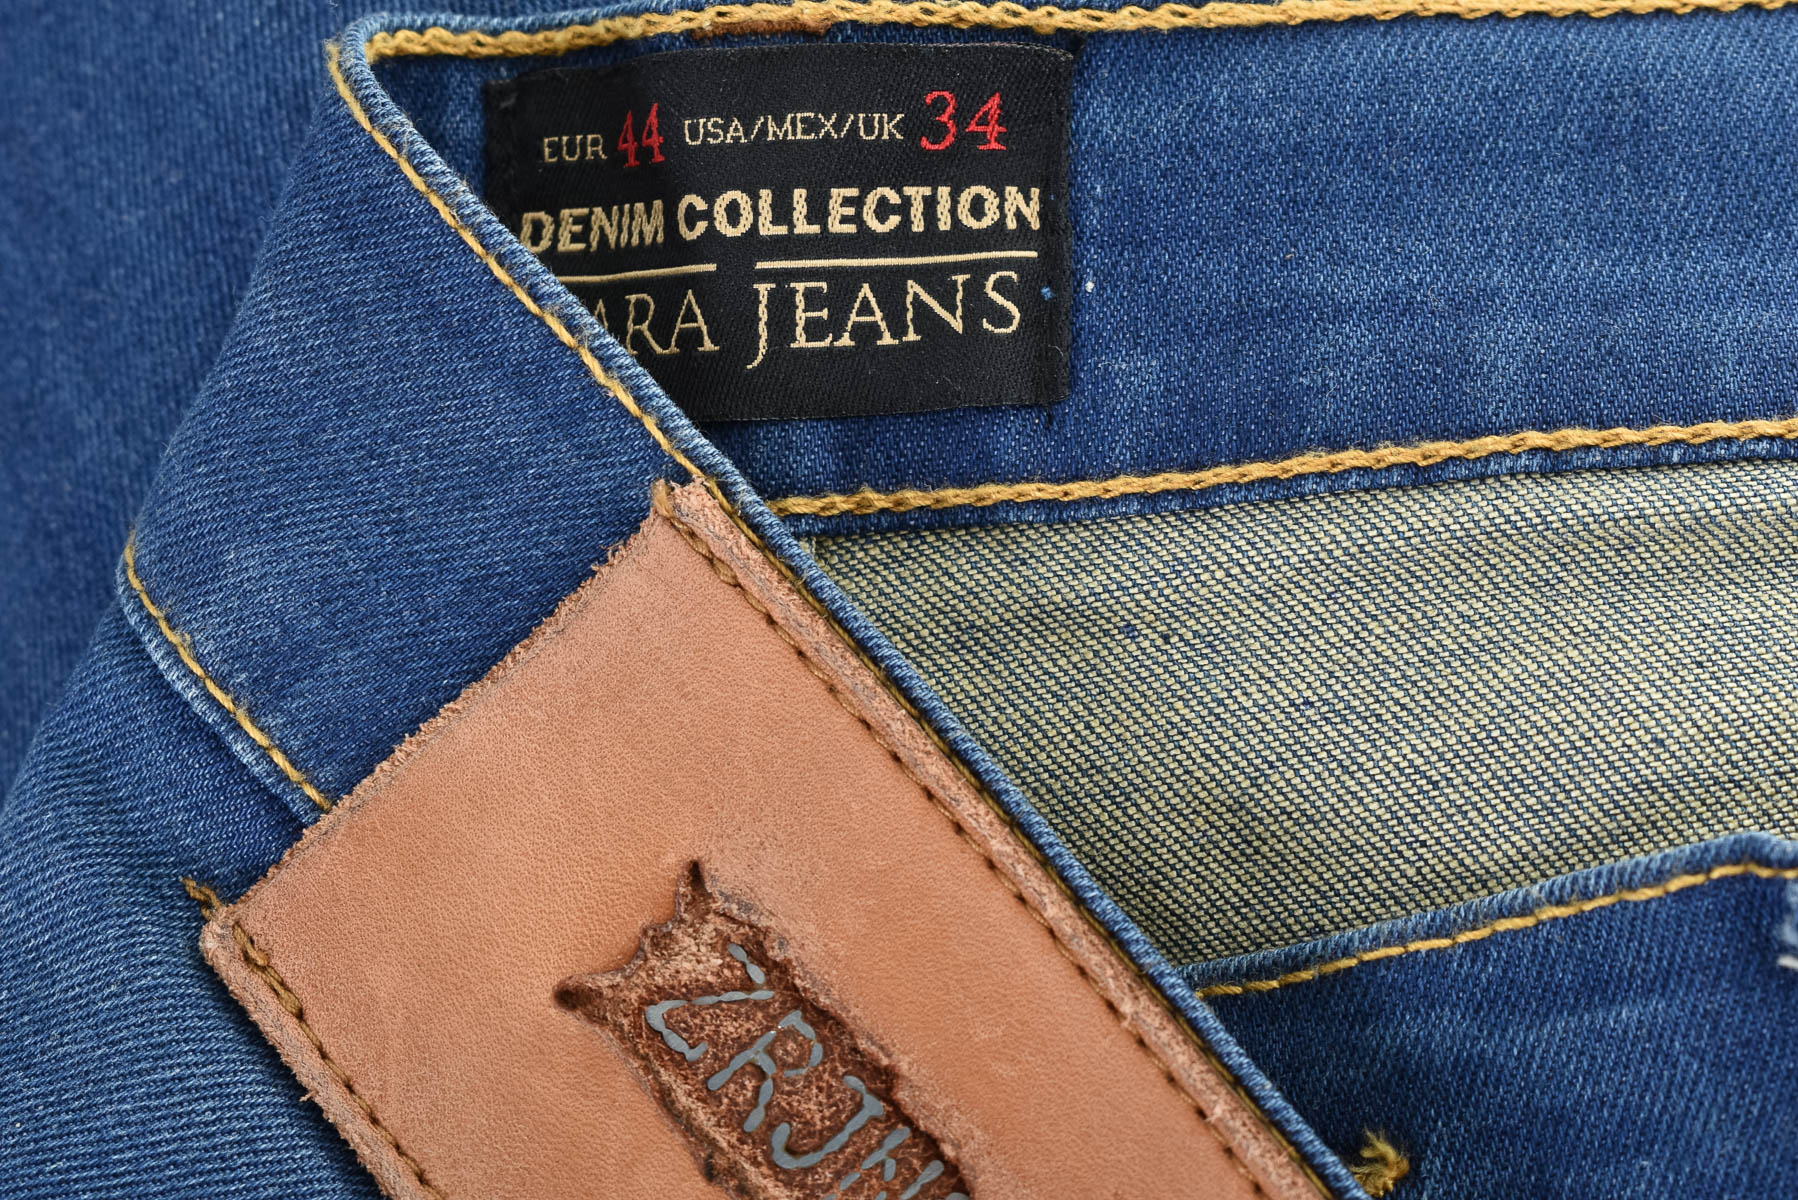 Men's jeans - ZARA Jeans - 2